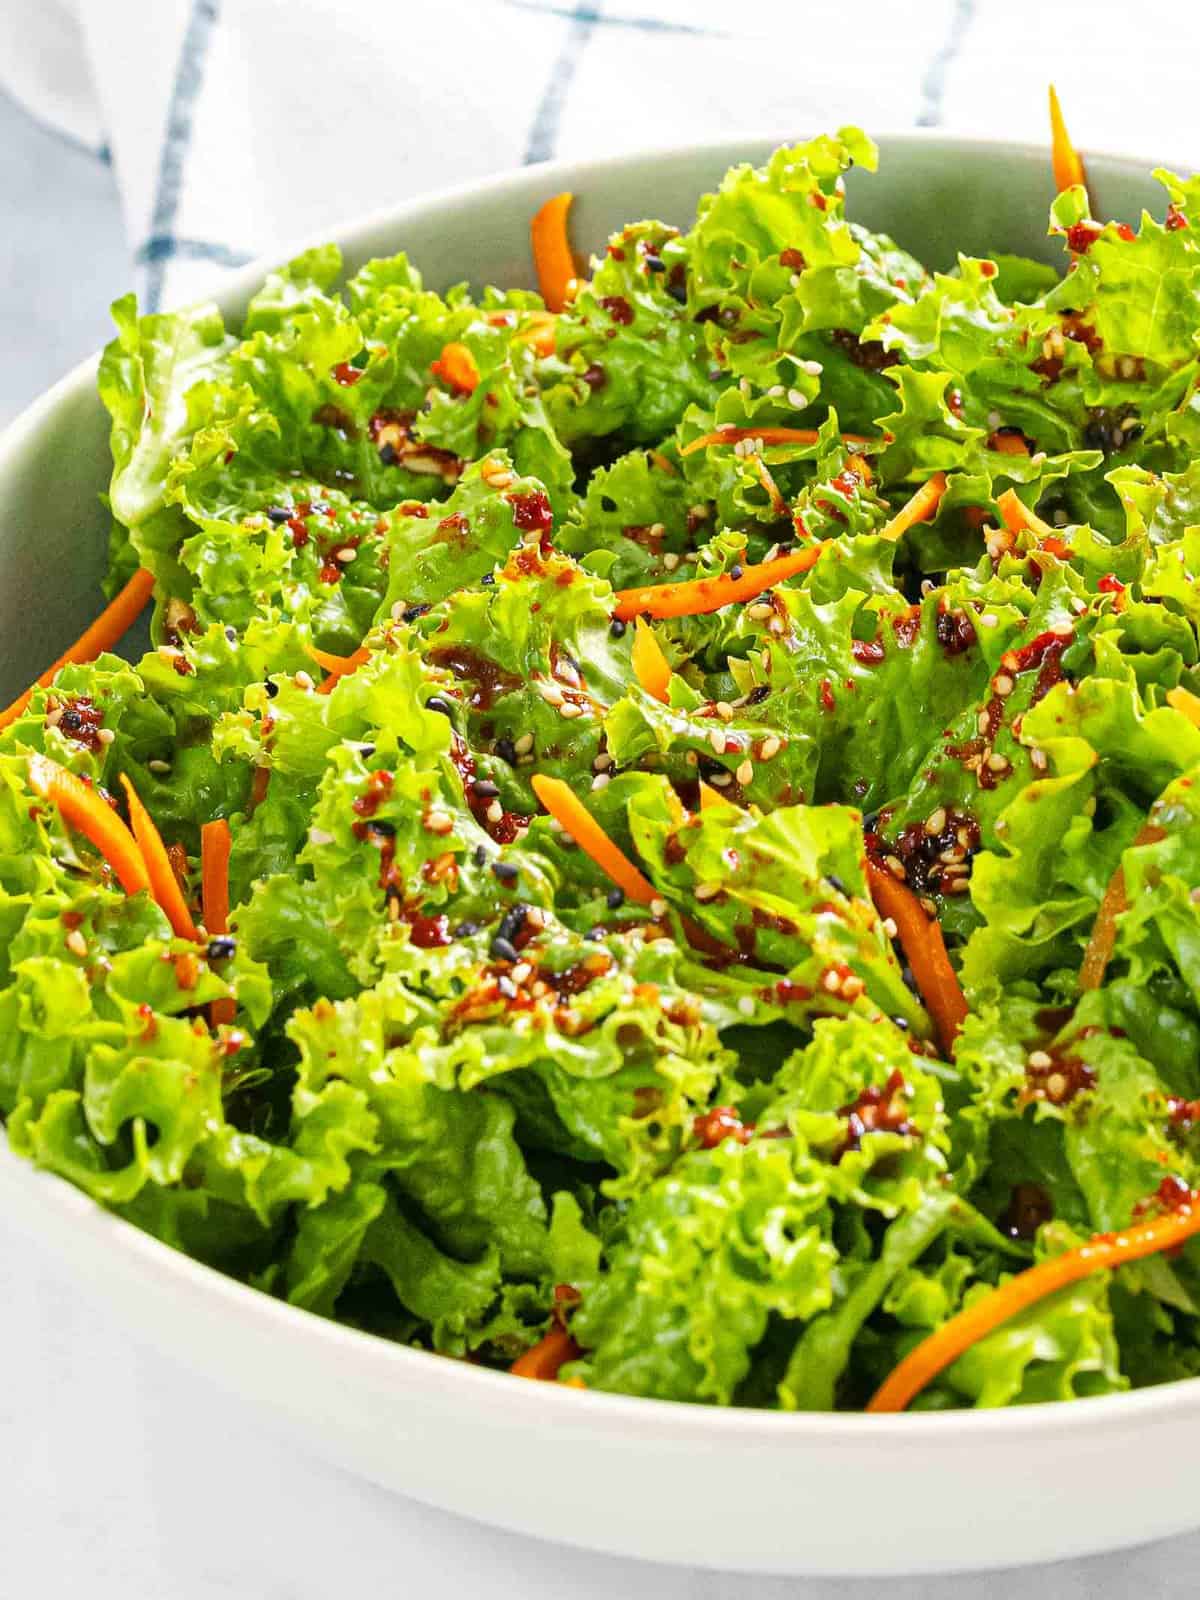 Korean lettuce salad with soy dressing.